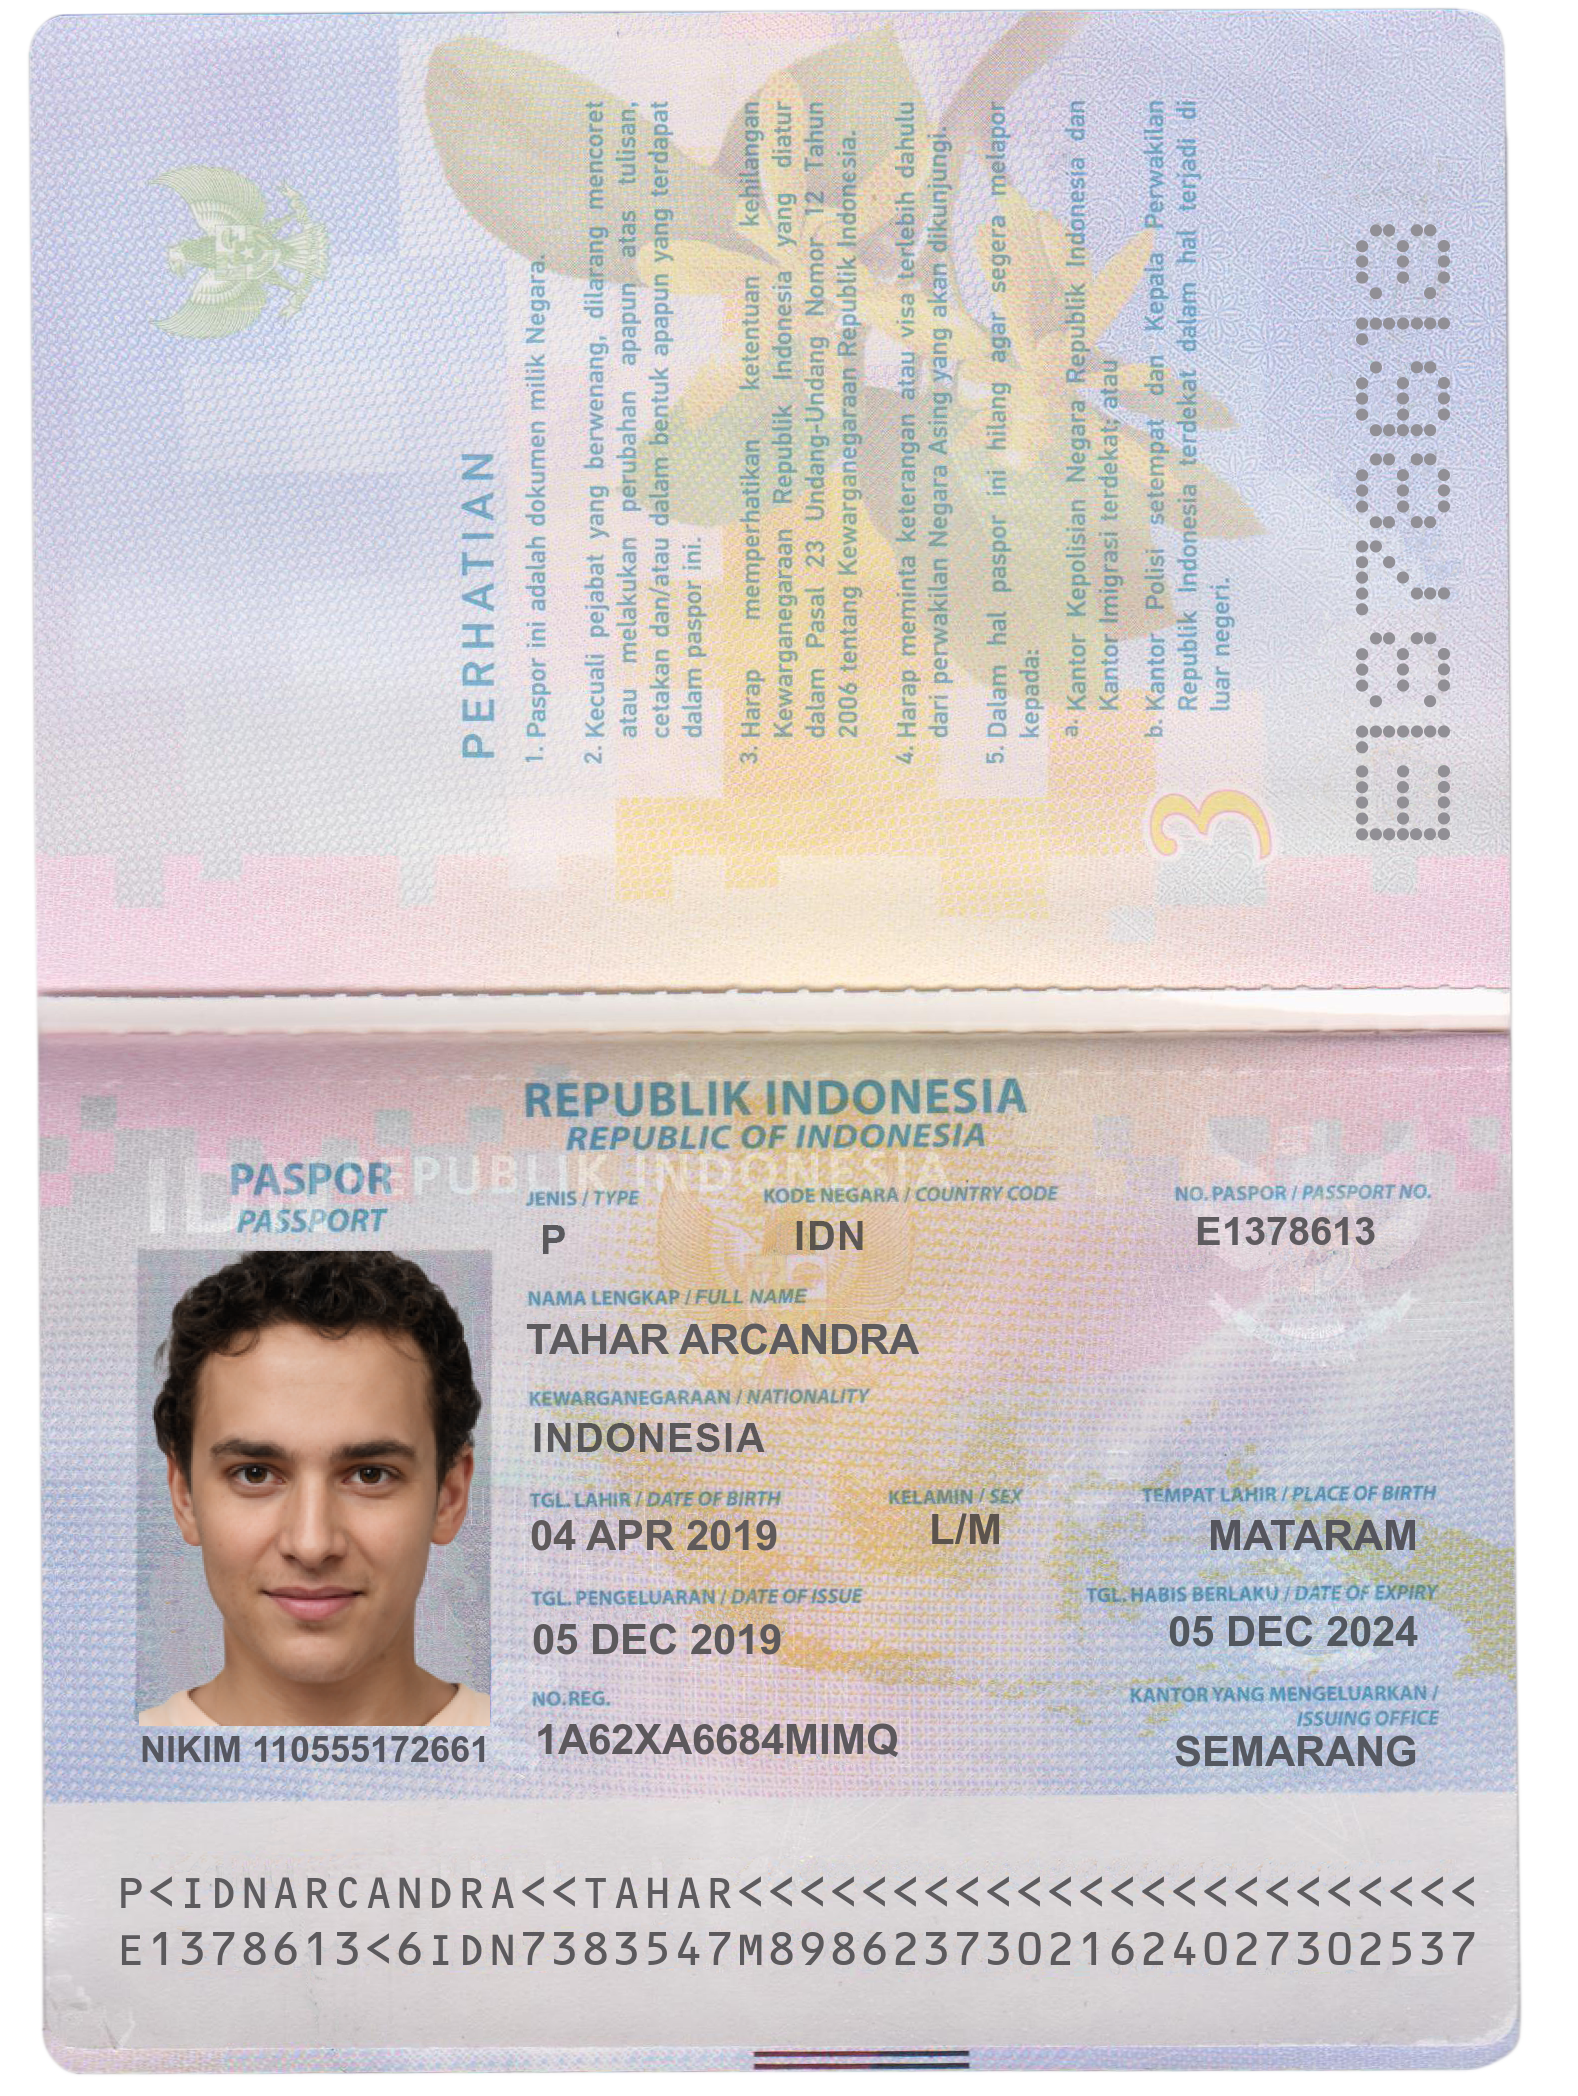 Indonesia PassPort